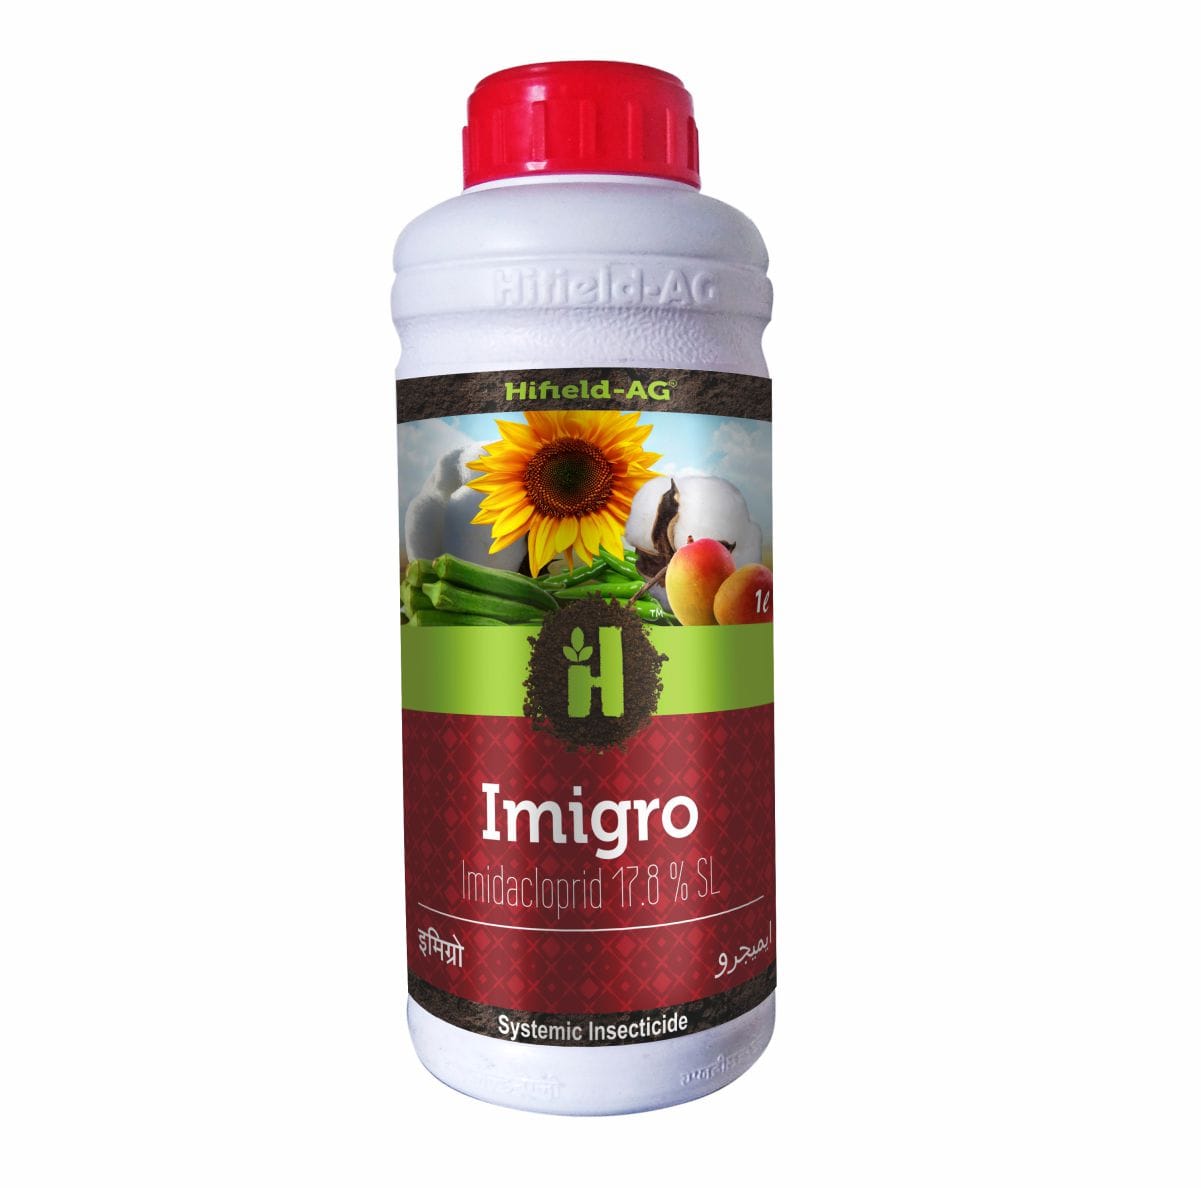 Imigro (Imidacloprid 17.8% SL)